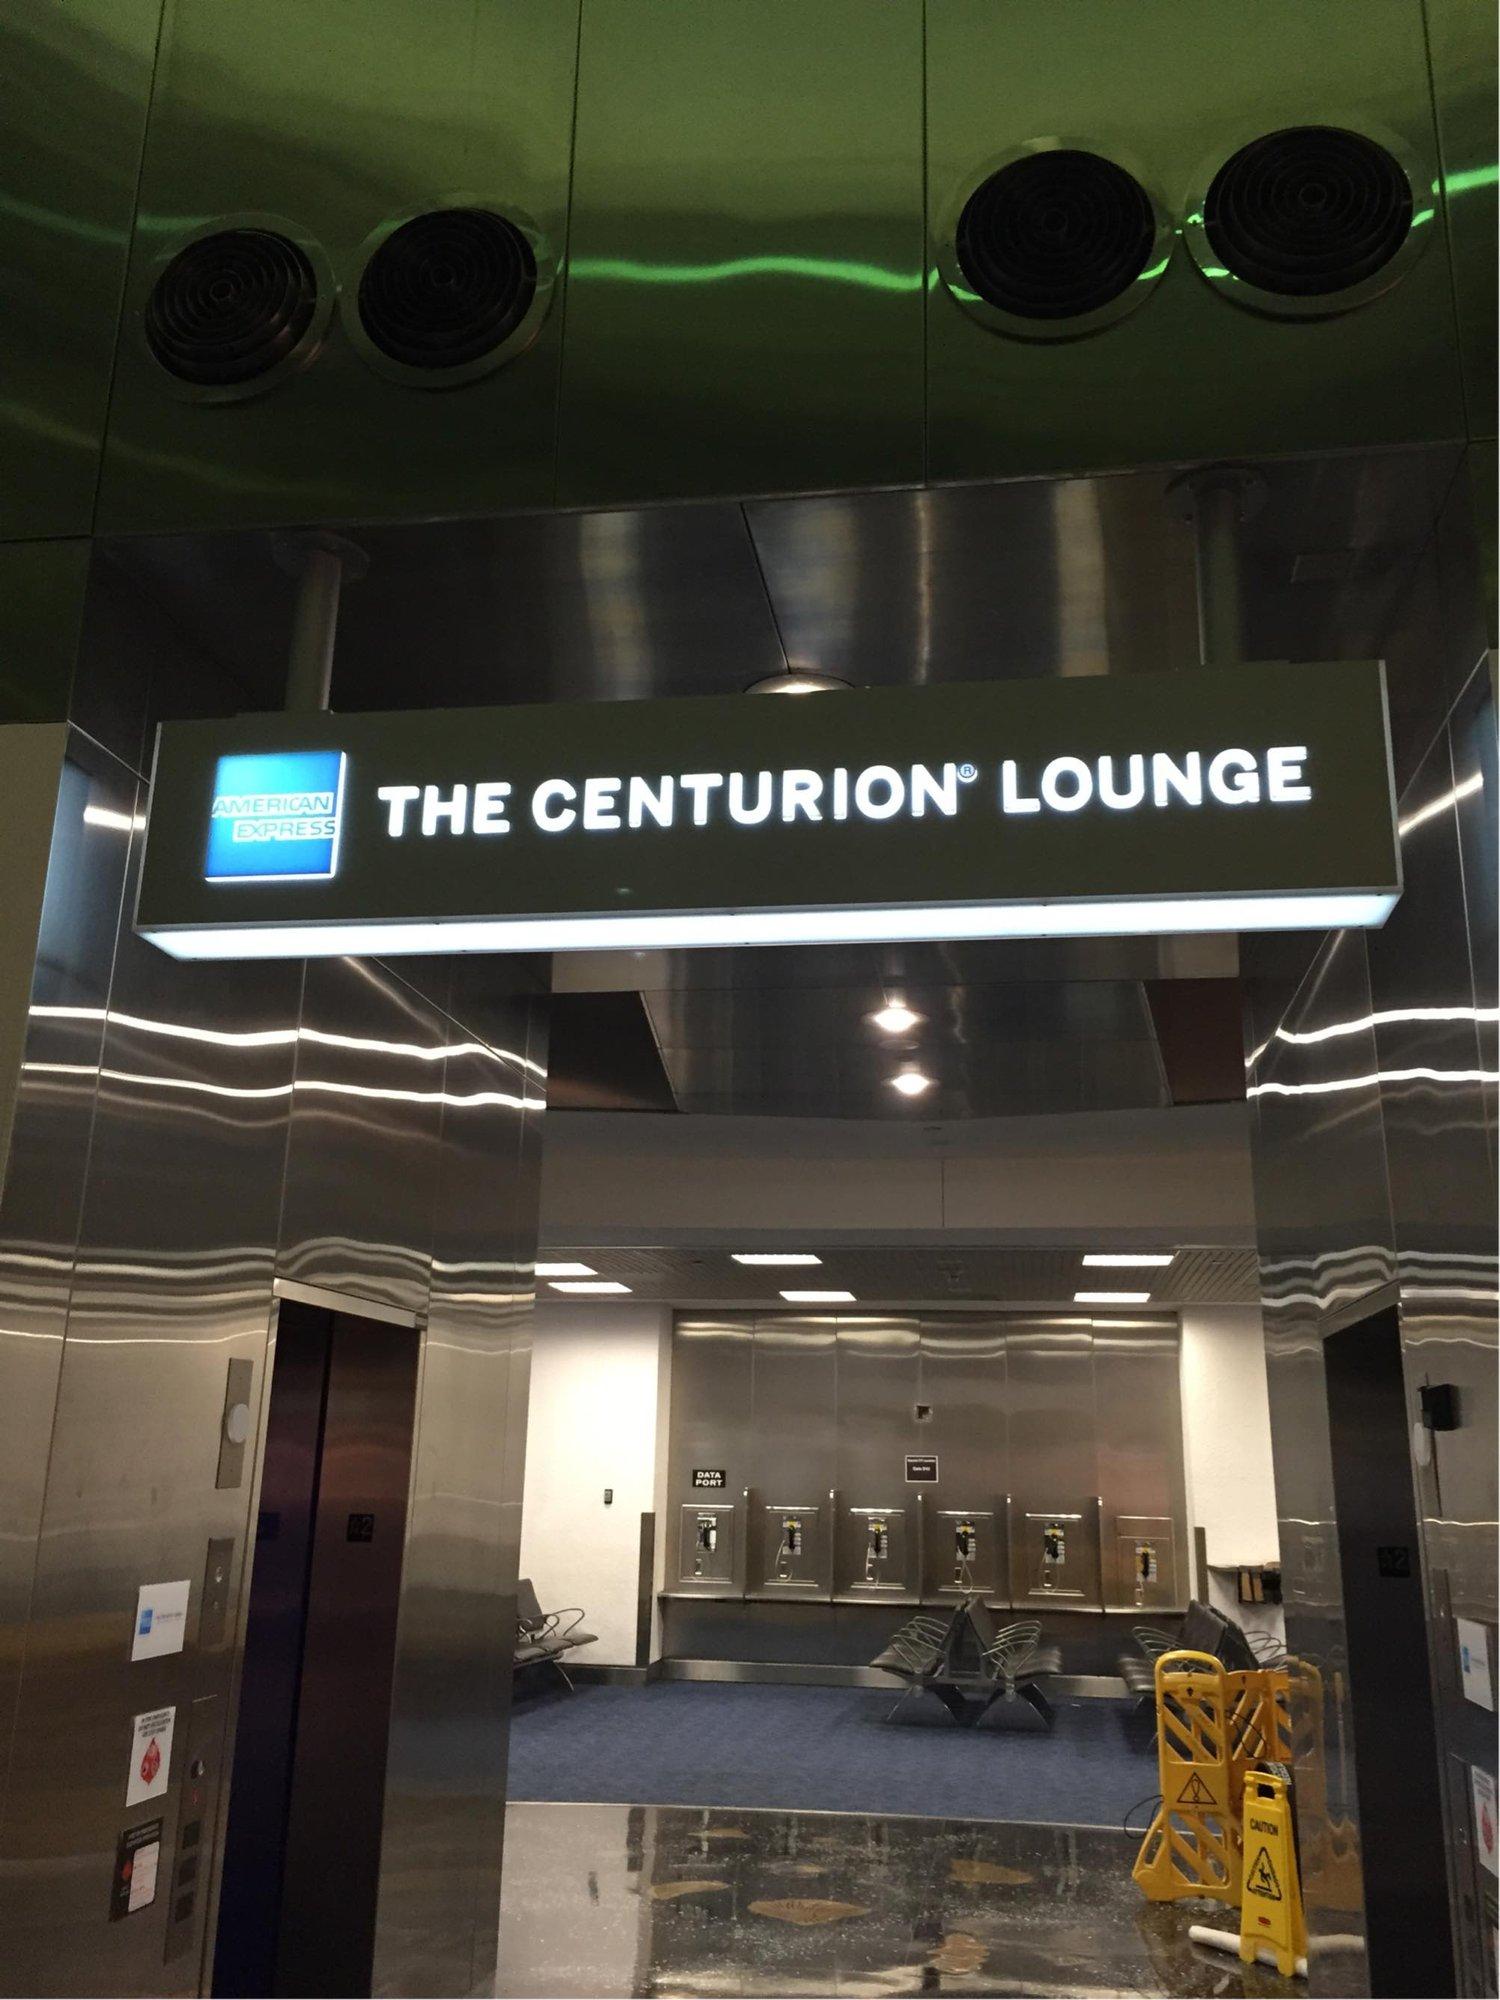 The Centurion Lounge image 53 of 76